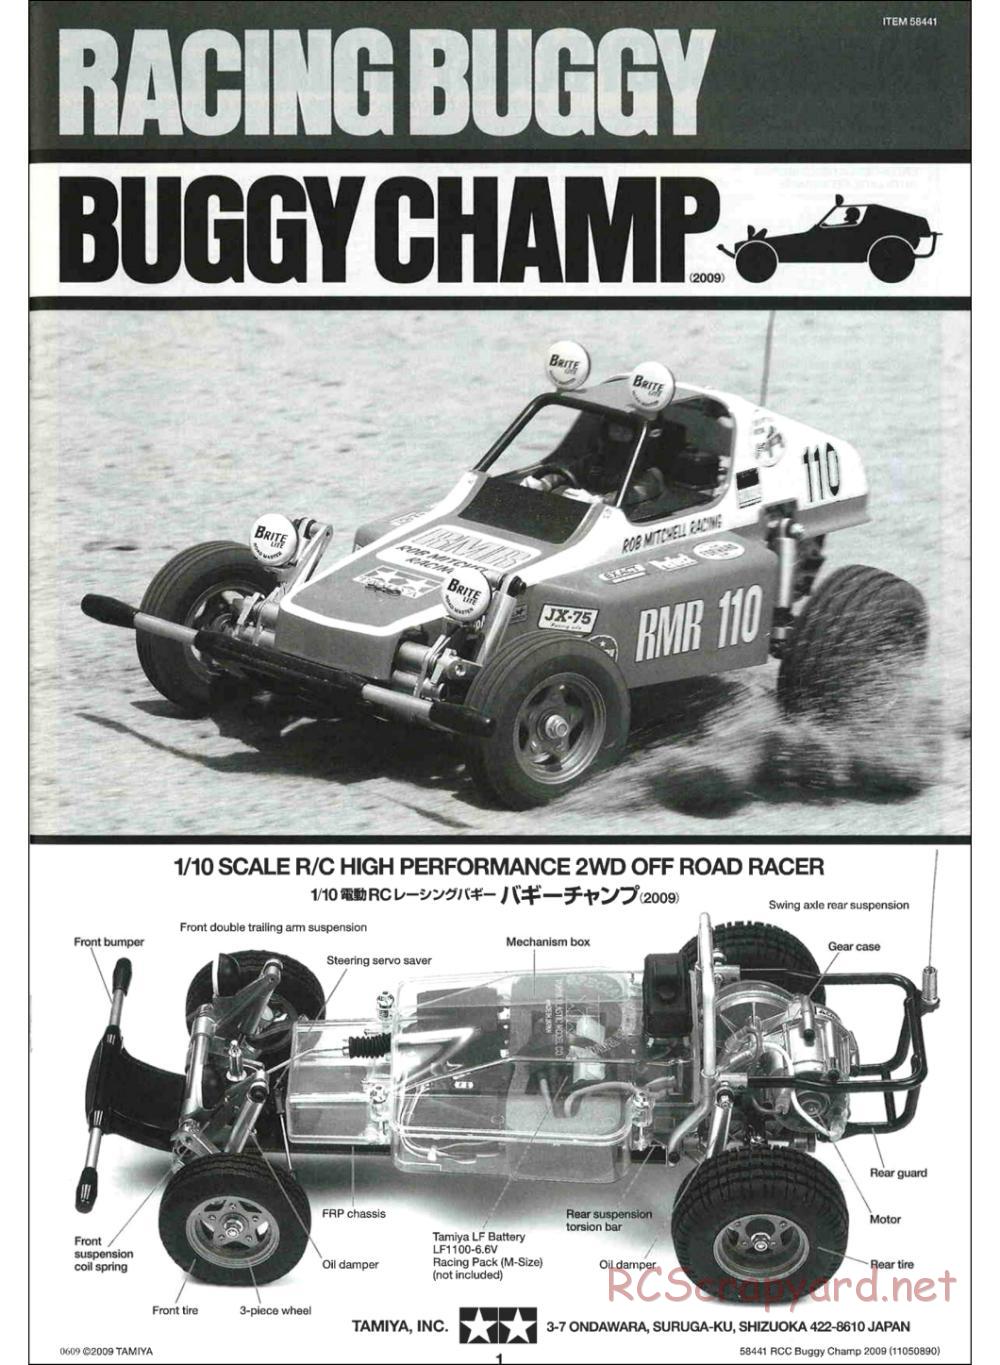 Tamiya - Buggy Champ Chassis - Manual - Page 1